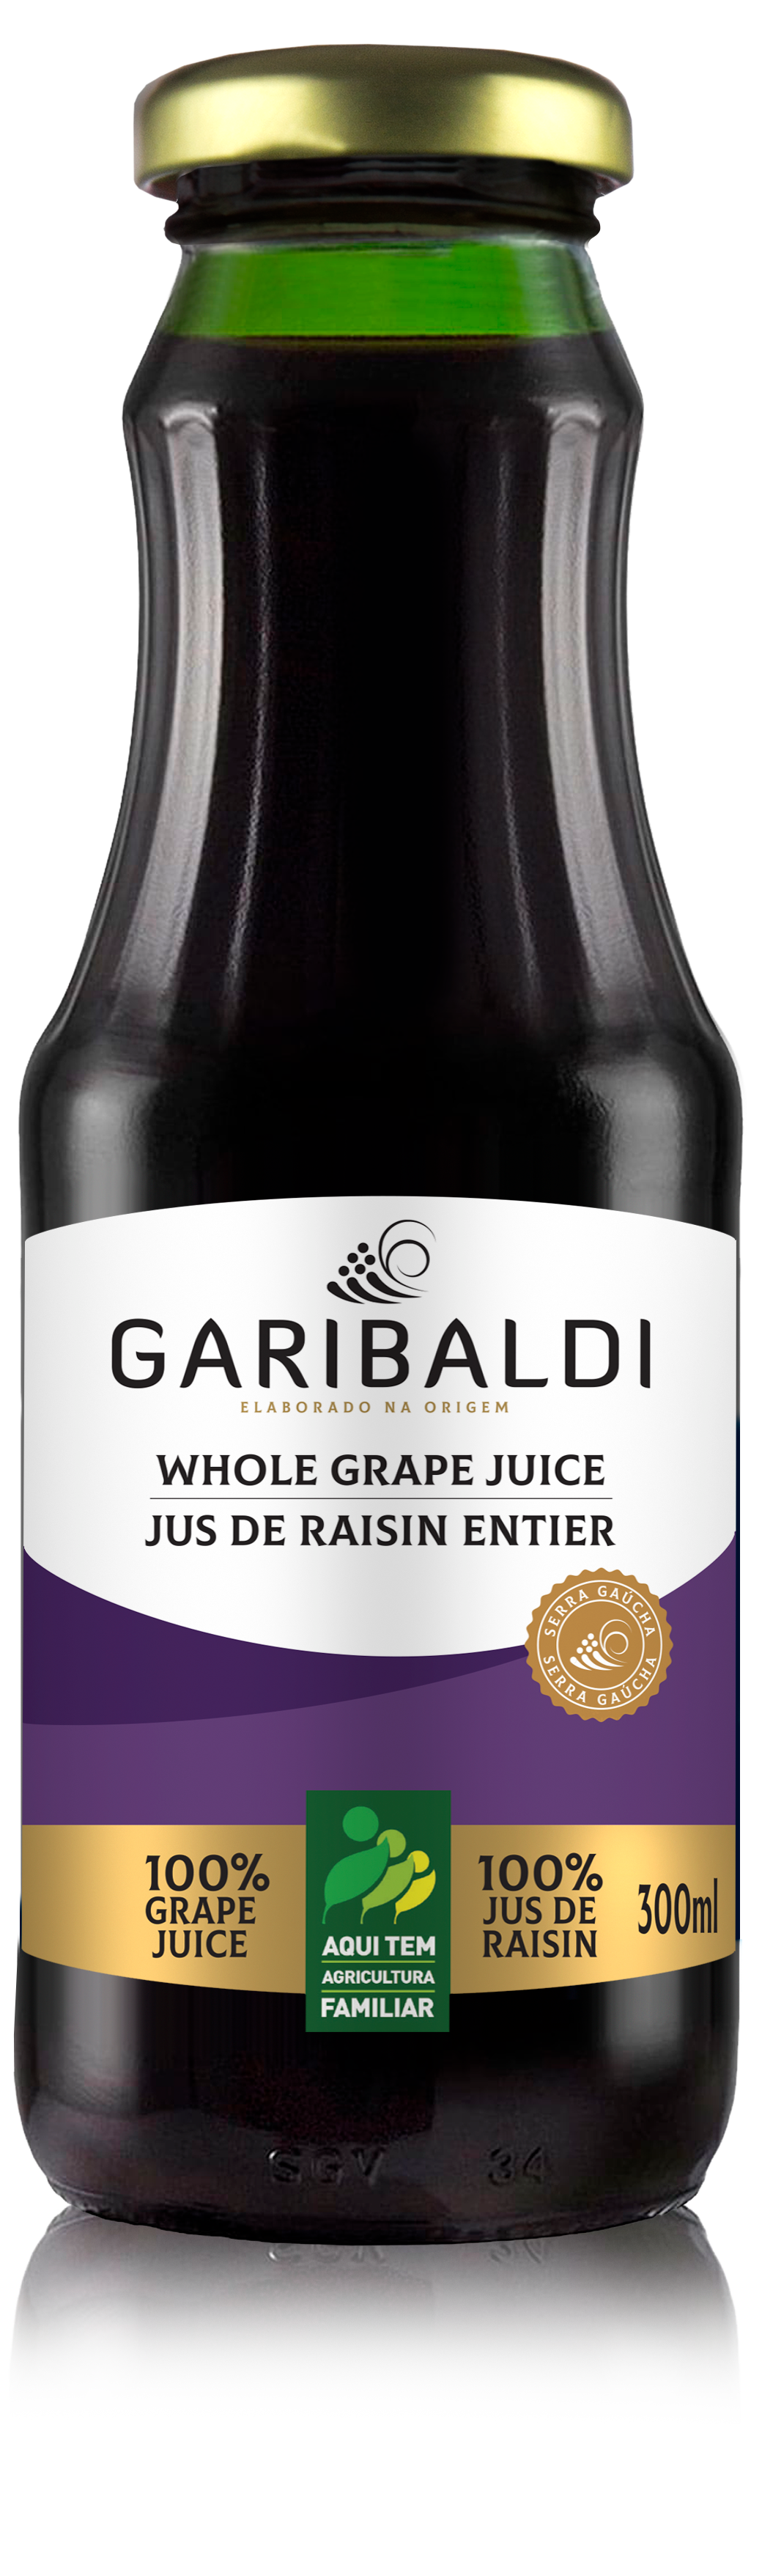 GARIBALDI - 100% Grape Juice 300ml